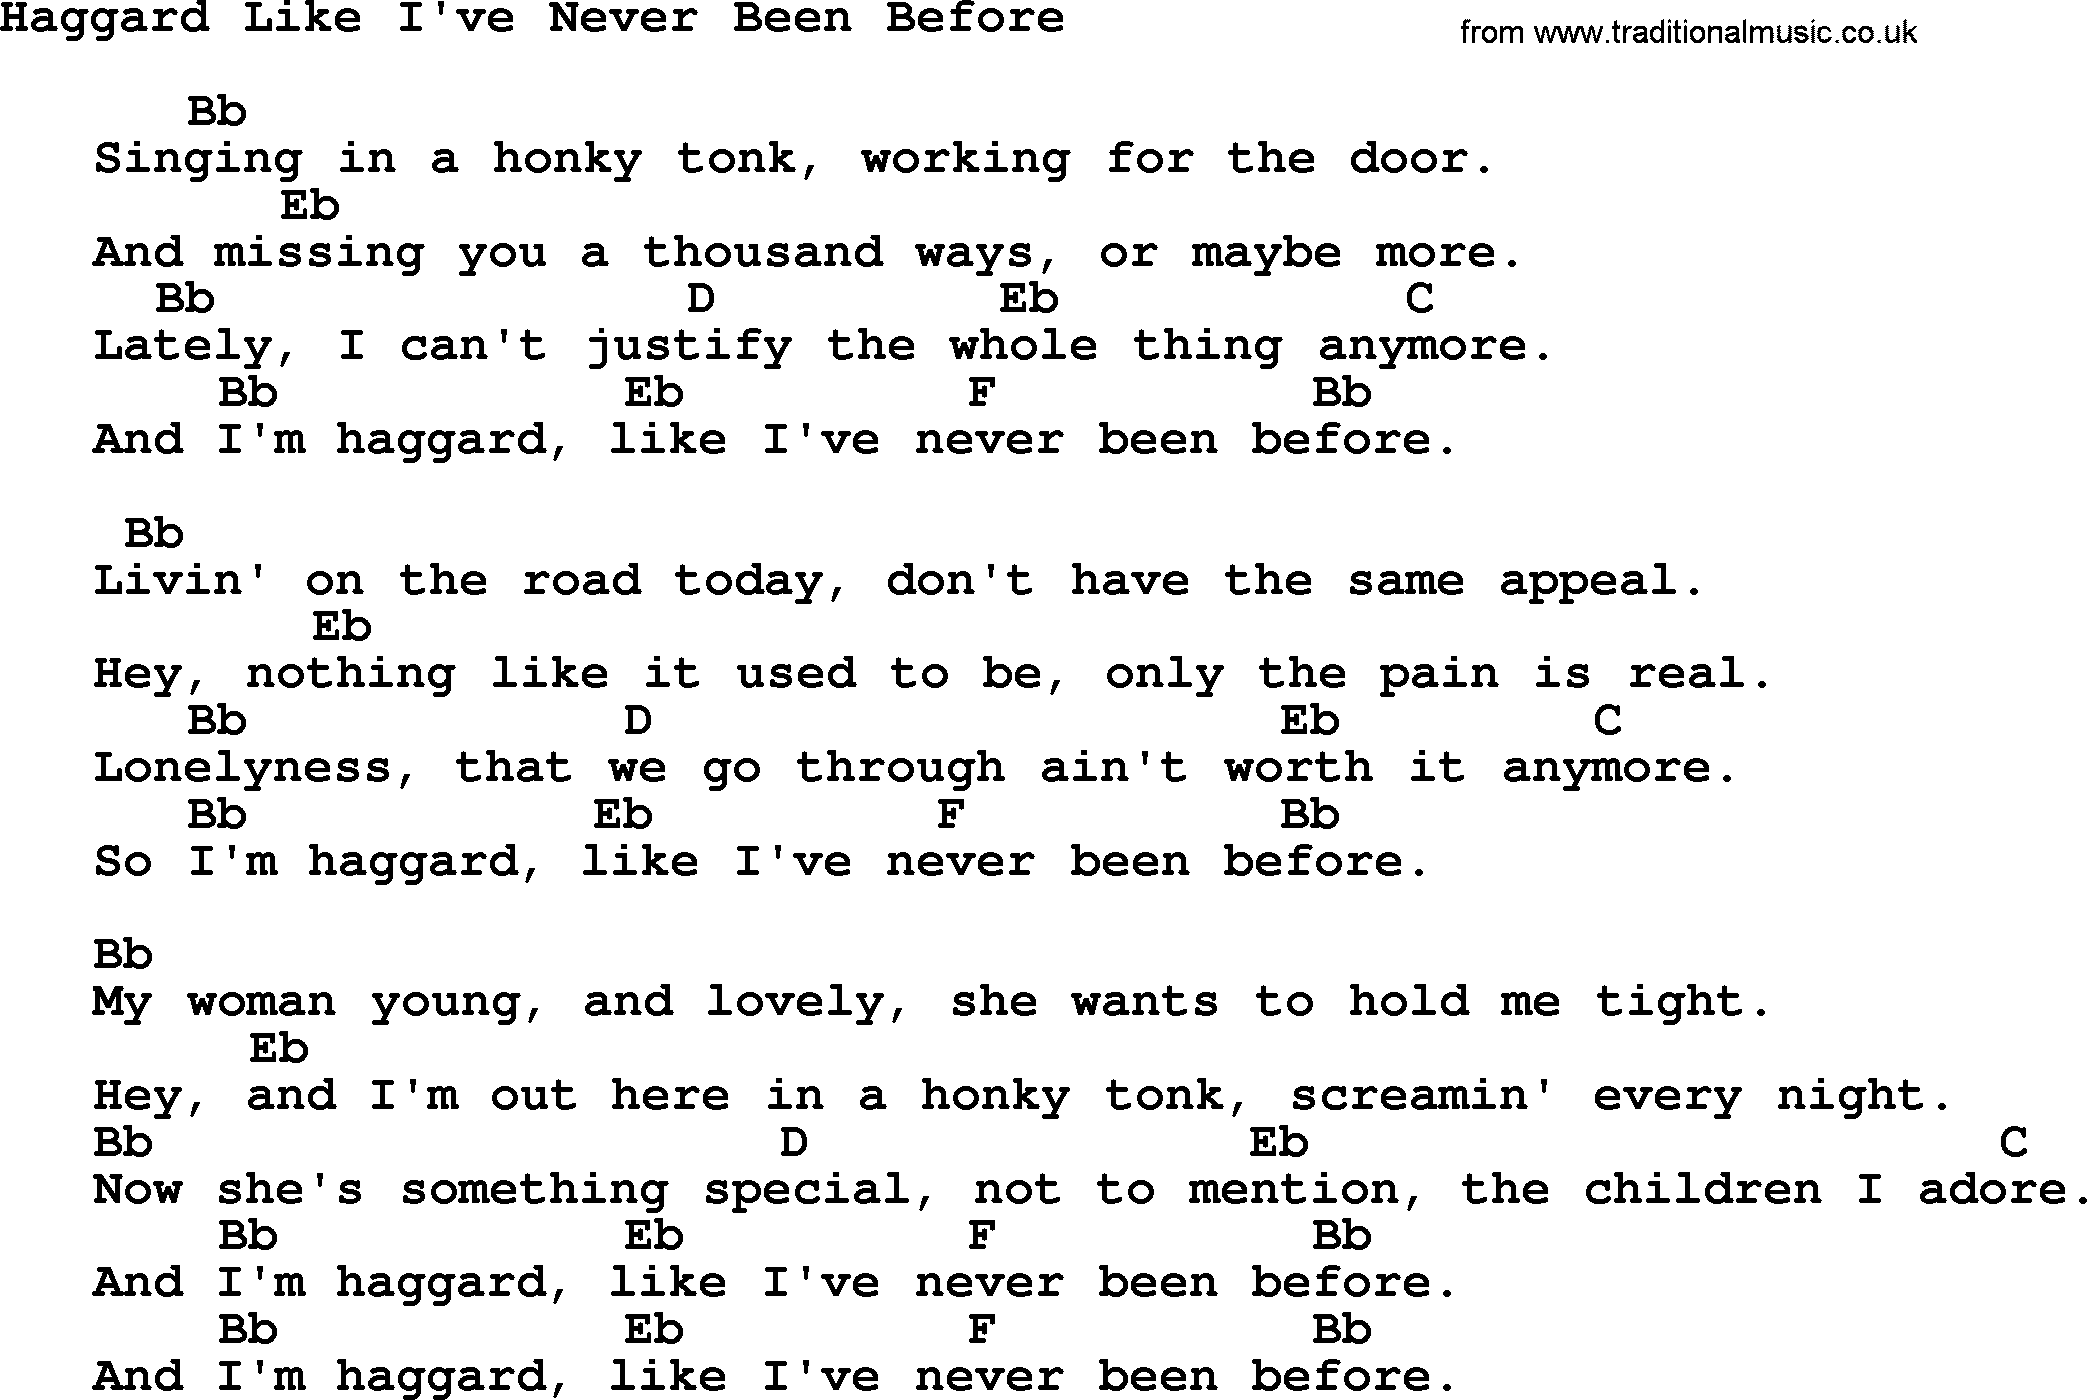 Merle Haggard song: Haggard Like I've Never Been Before, lyrics and chords